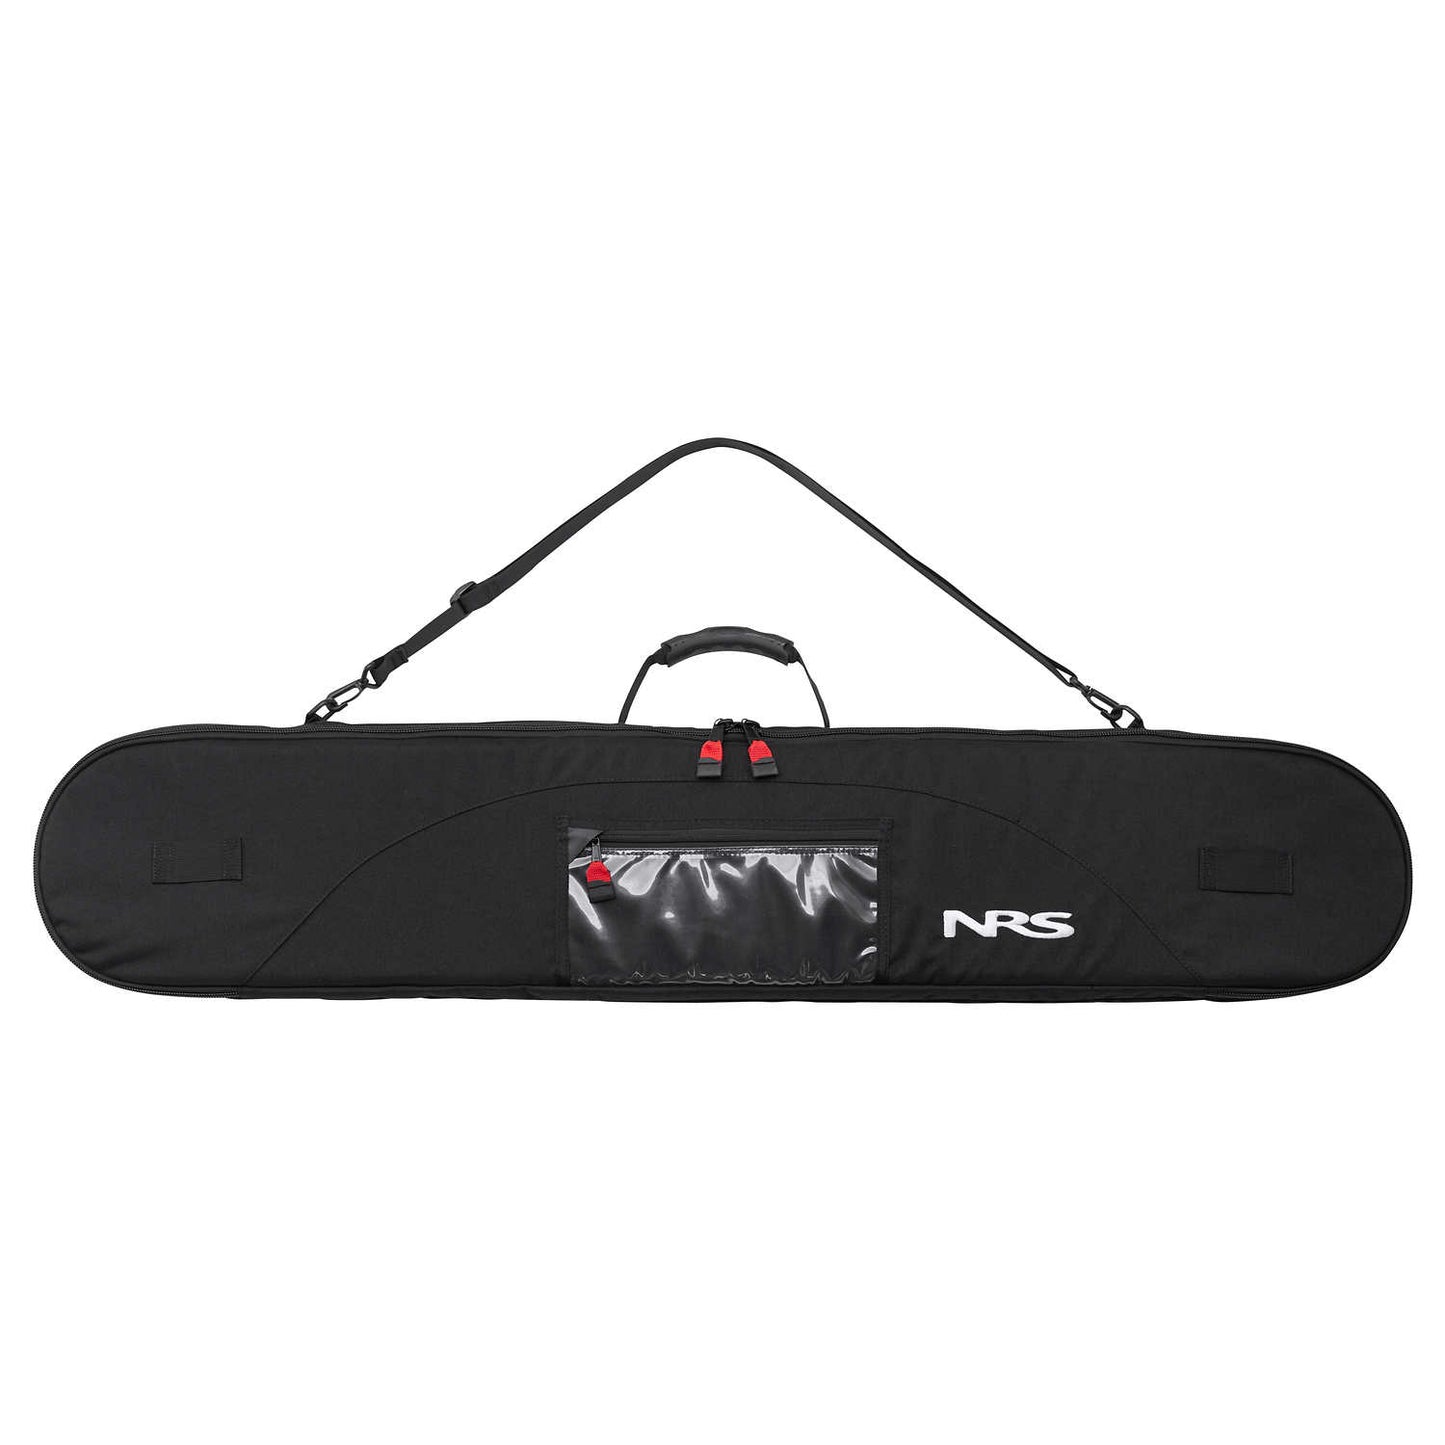 NRS Paddle Bag (2-piece paddles), Black